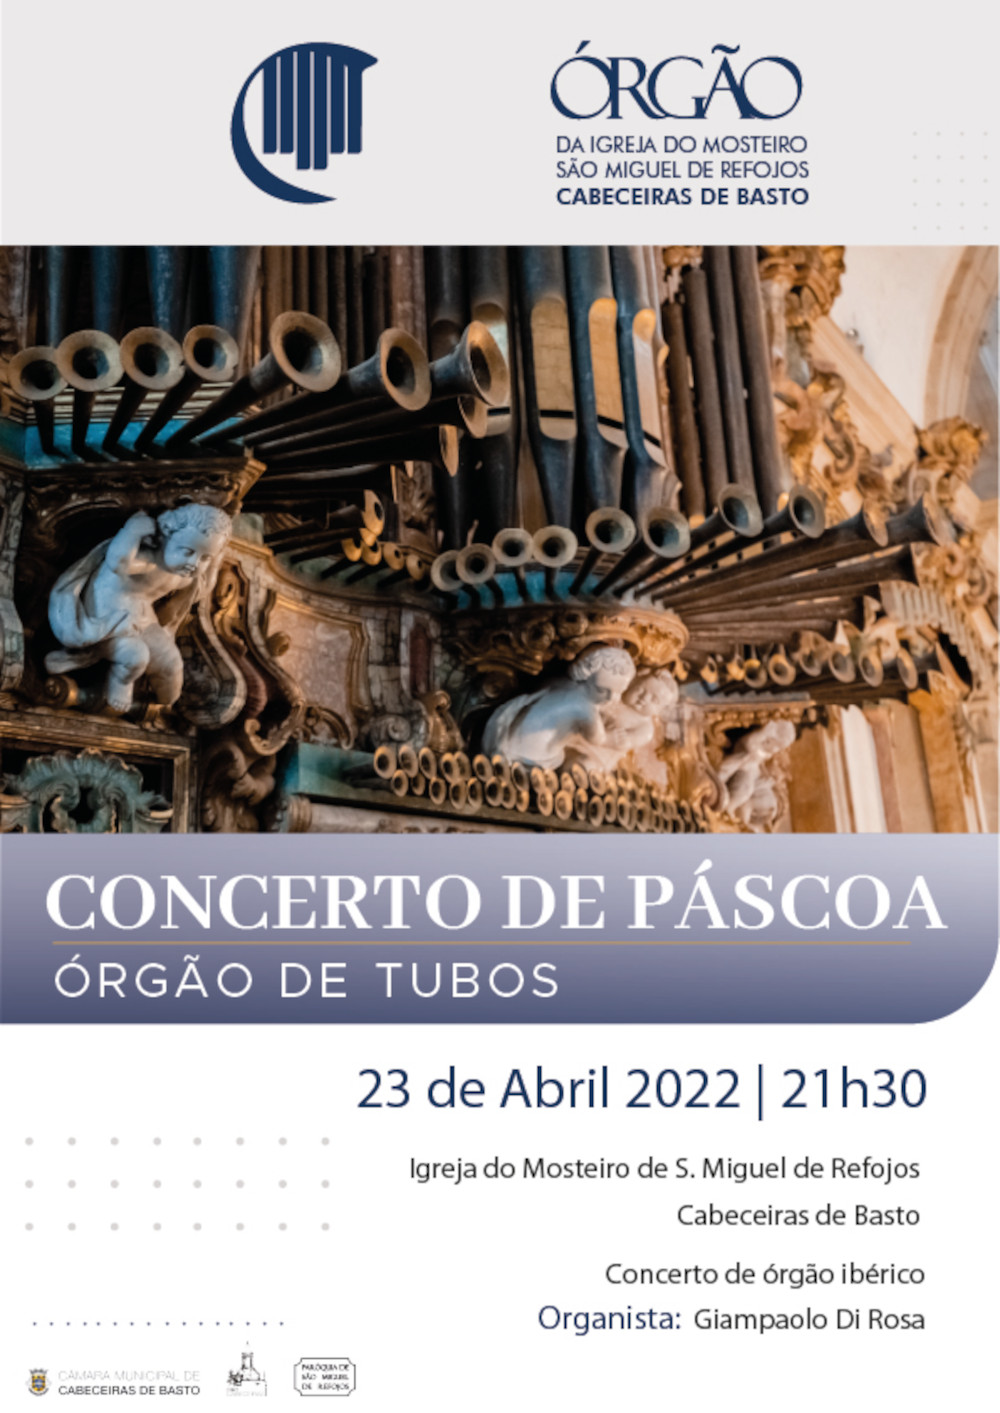 Concerto de Pscoa | rgo de Tubos